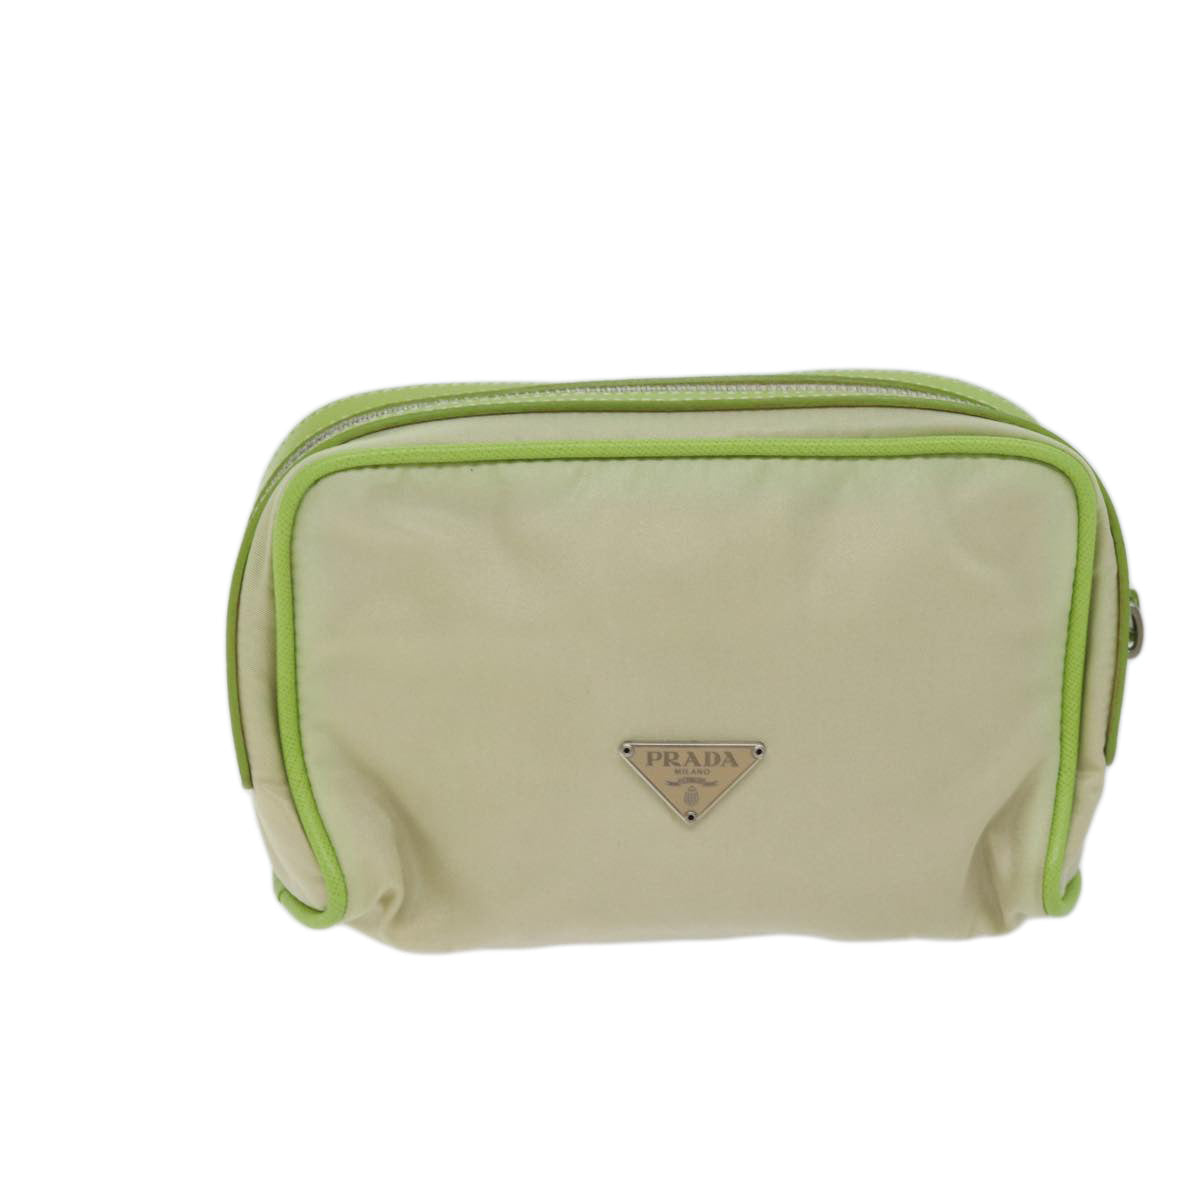 Prada Tessuto Green Synthetic Clutch Bag ()